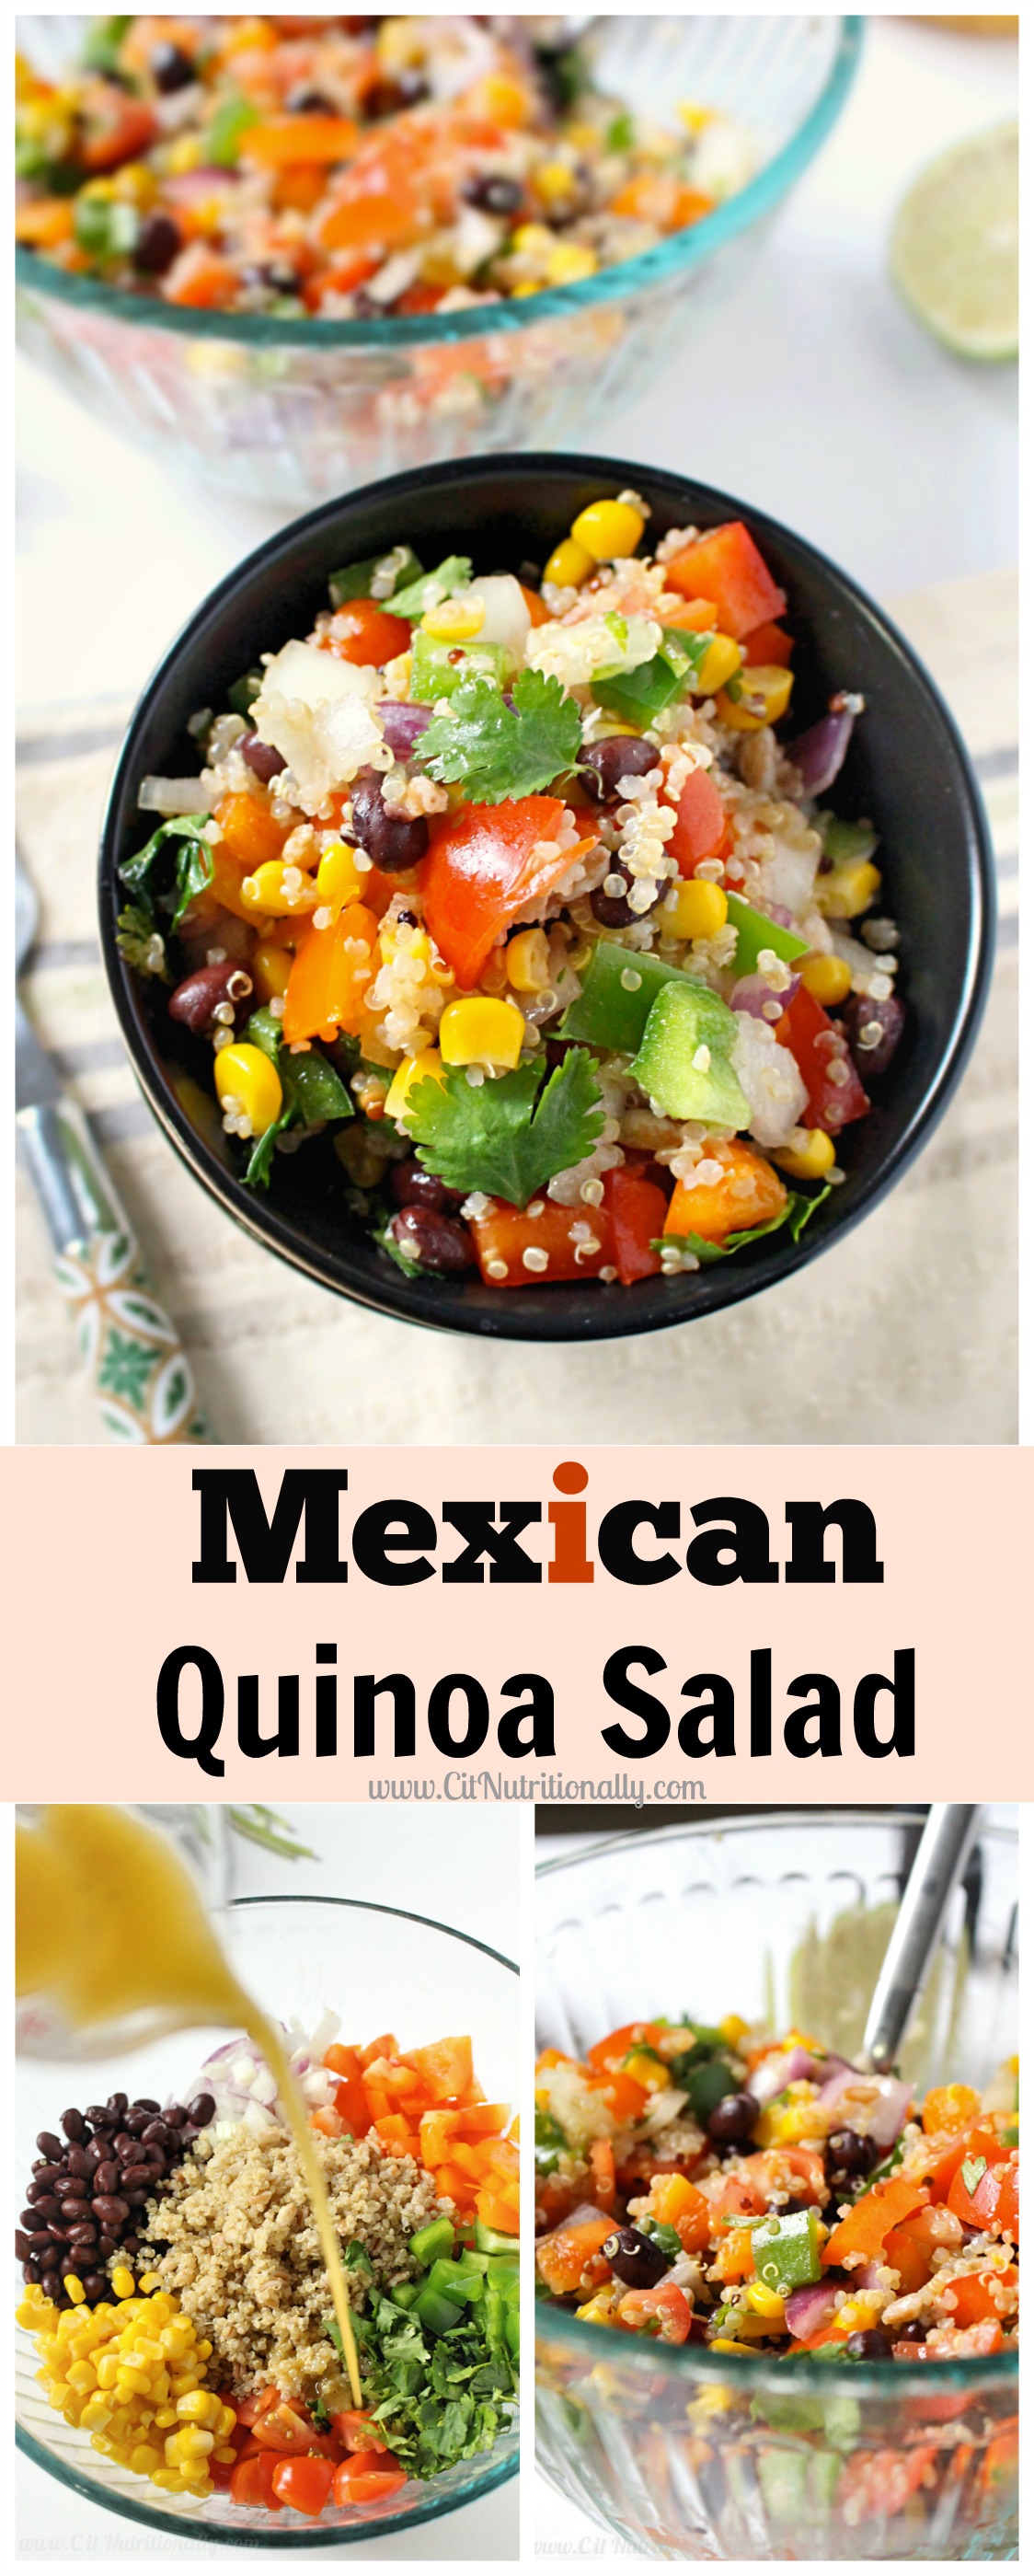 Mexican Quinoa Salad | C it Nutritionally